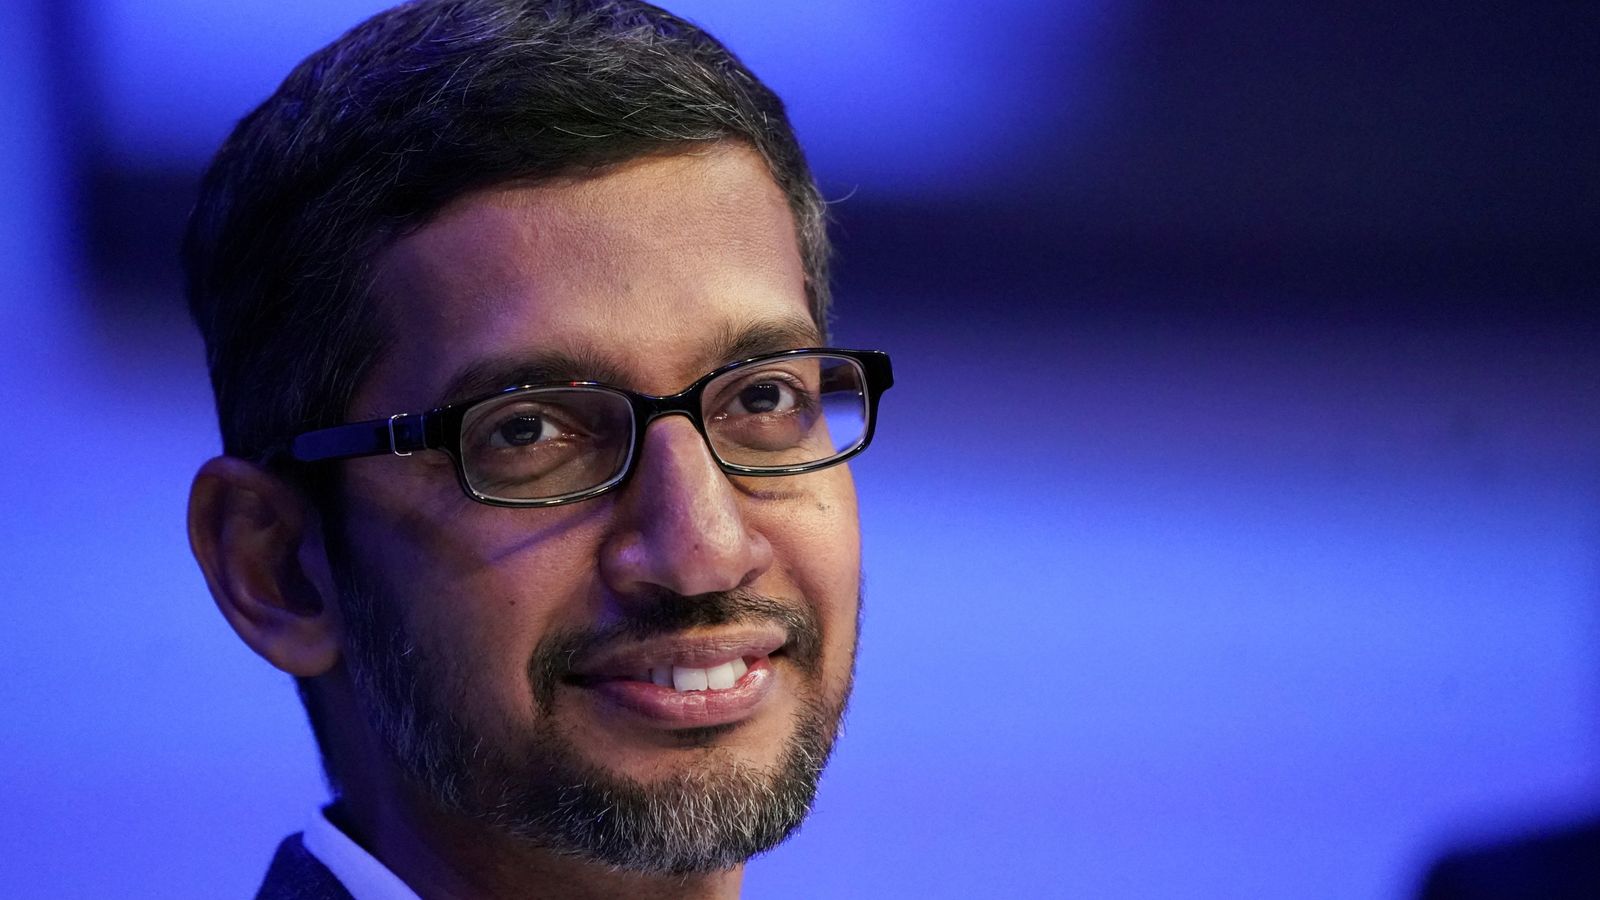 Google boss Sundar Pichai admits AI dangers 'keep me up at night'